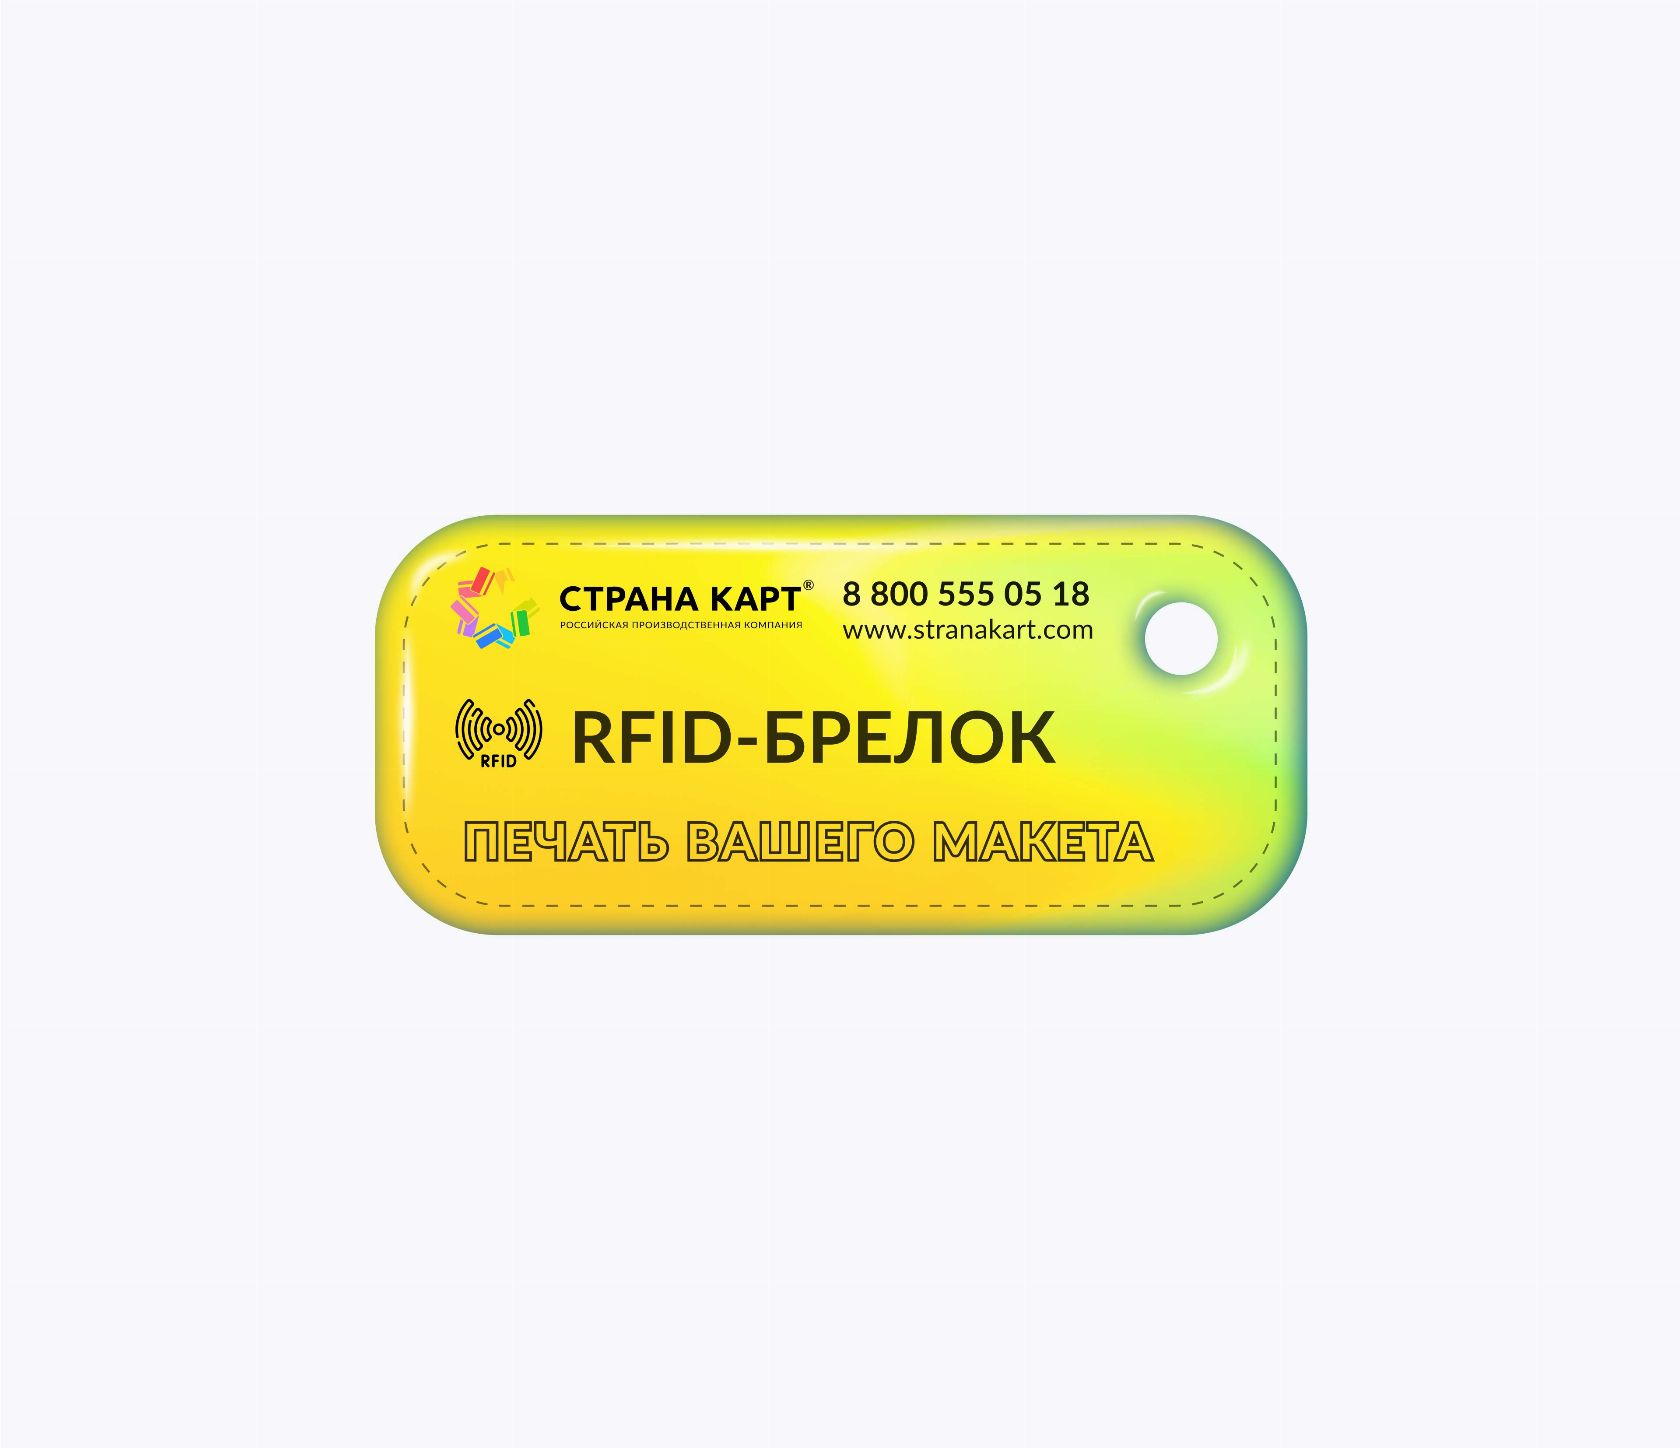 Прямоугольные мини RFID-брелоки NEOKEY® с чипом NXP NFC NTAG 213 RFID-брелоки NEOKEY® с чипом NXP NFC NTAG 213 и вашим логотипом